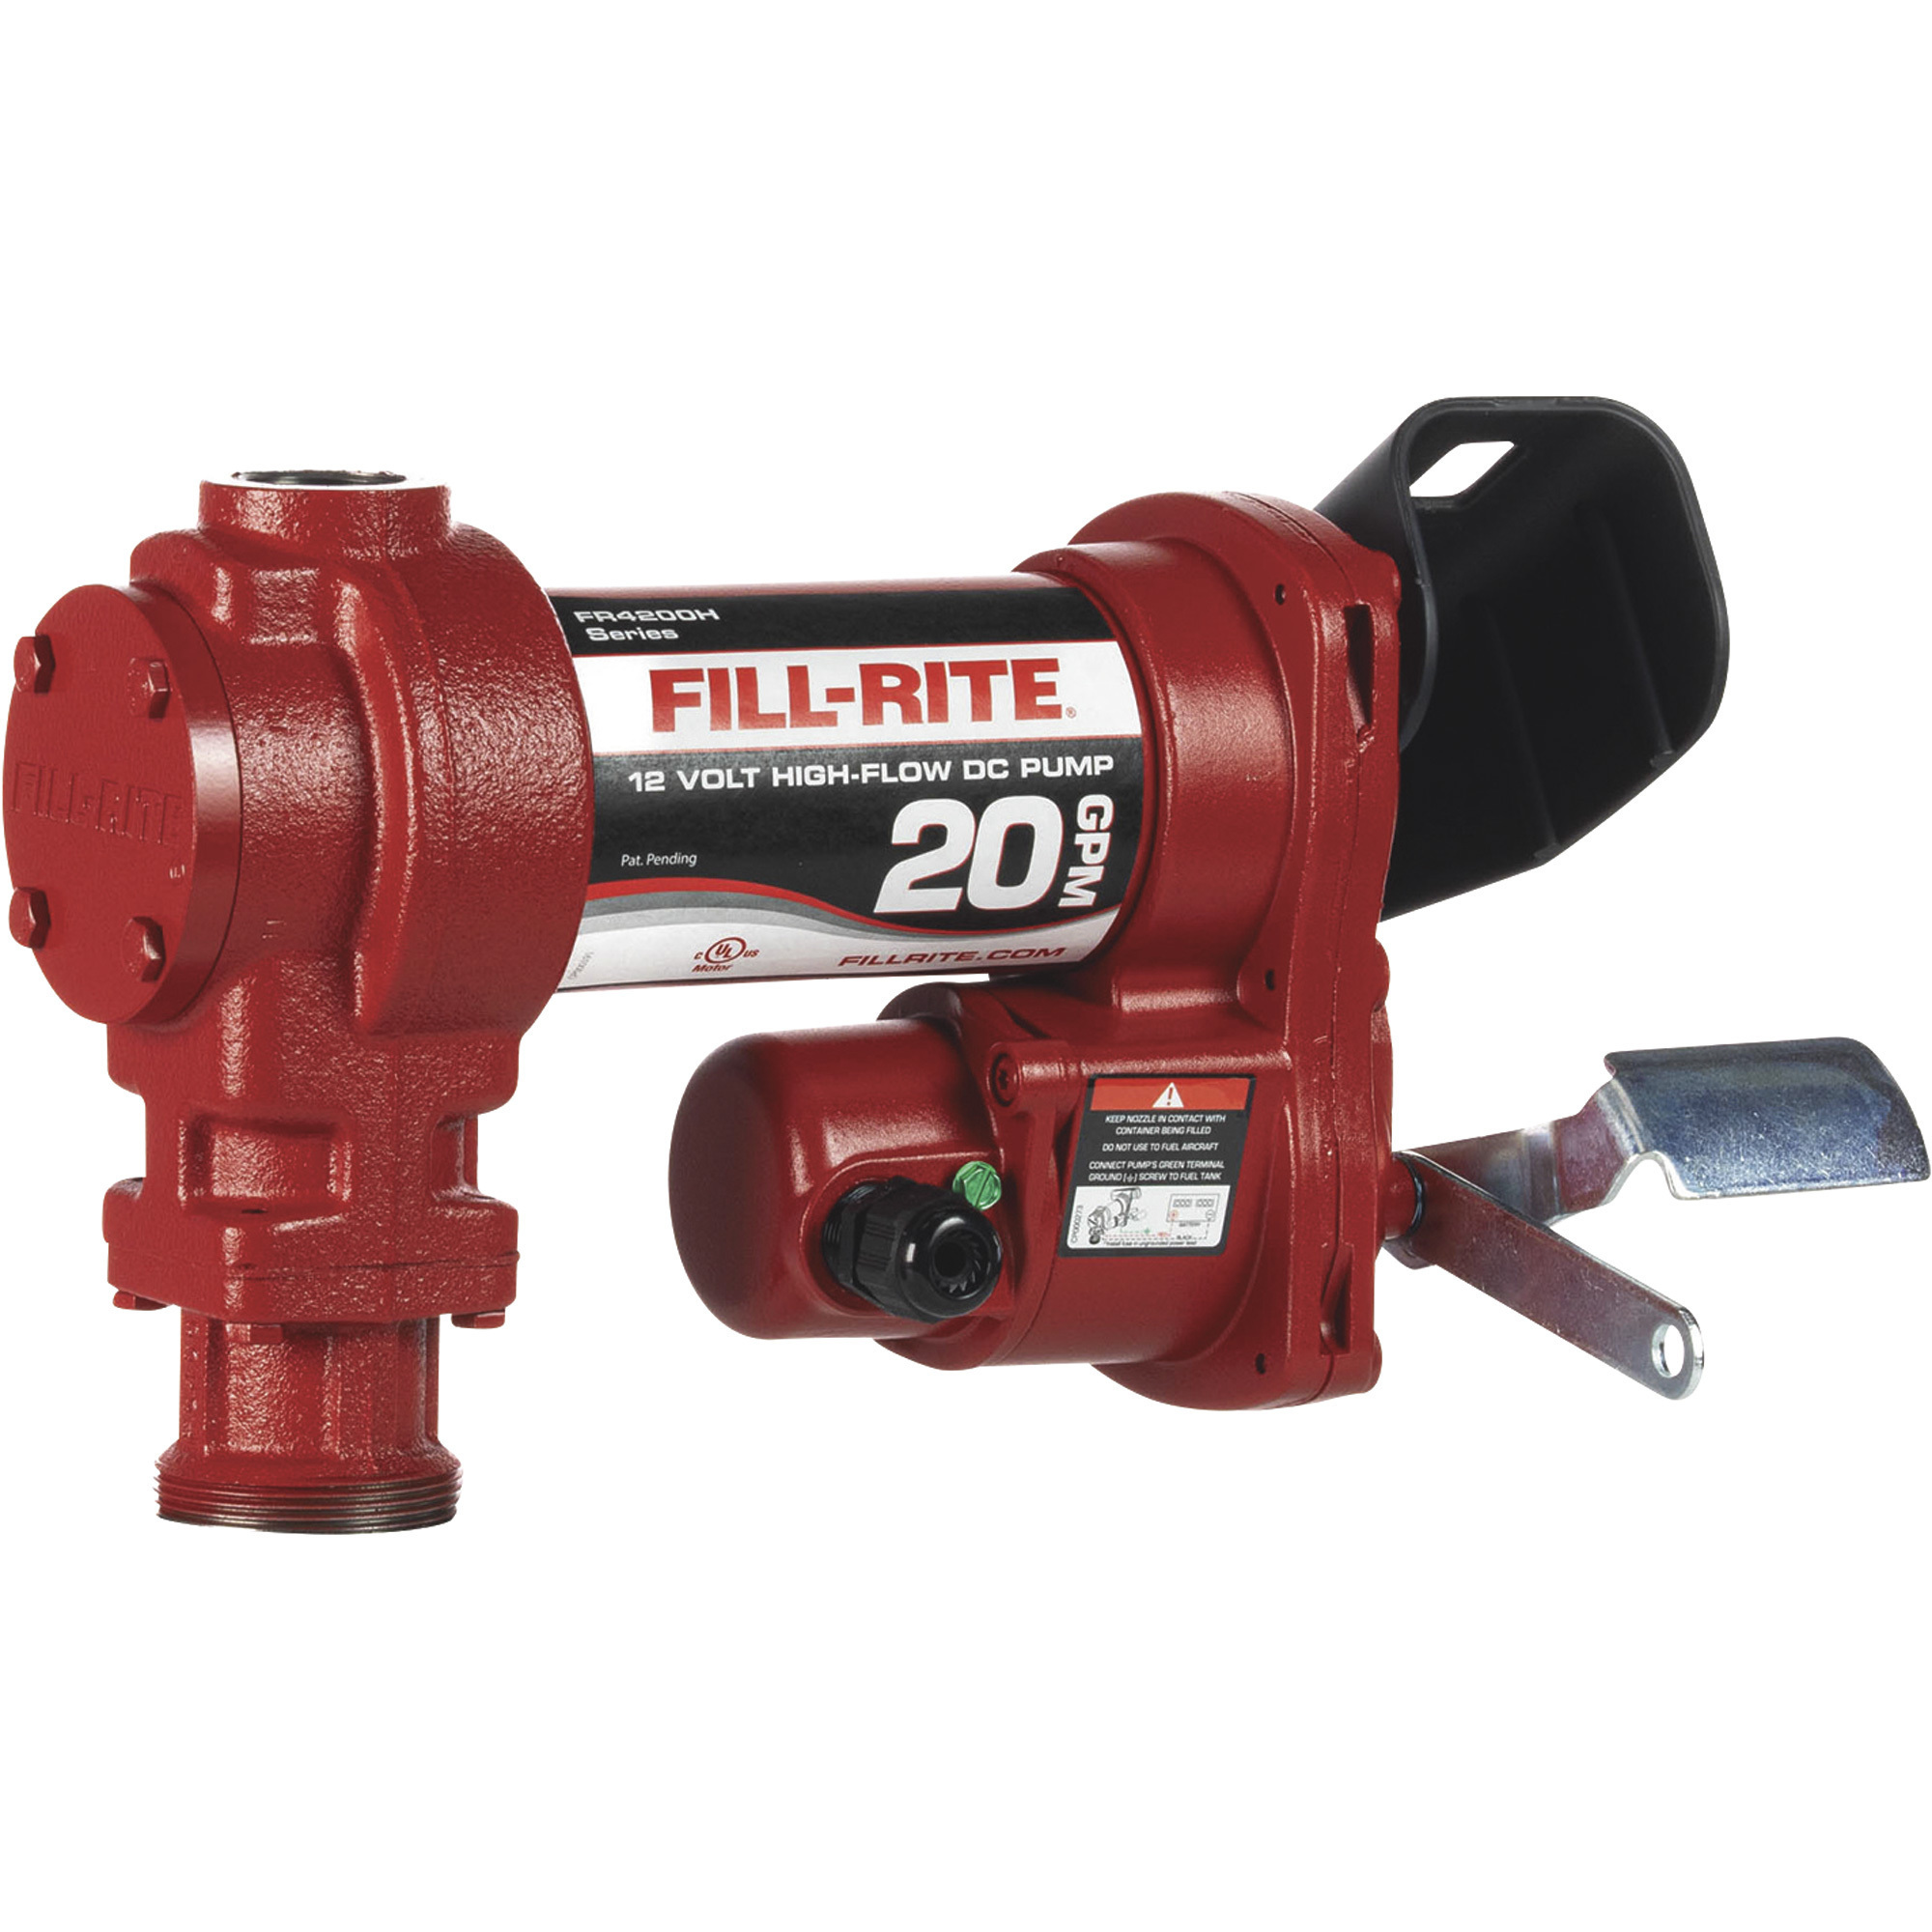 Fill-Rite 12V DC Fuel Transfer Pump â 20 GPM, Pump Only, ModelFR4204H